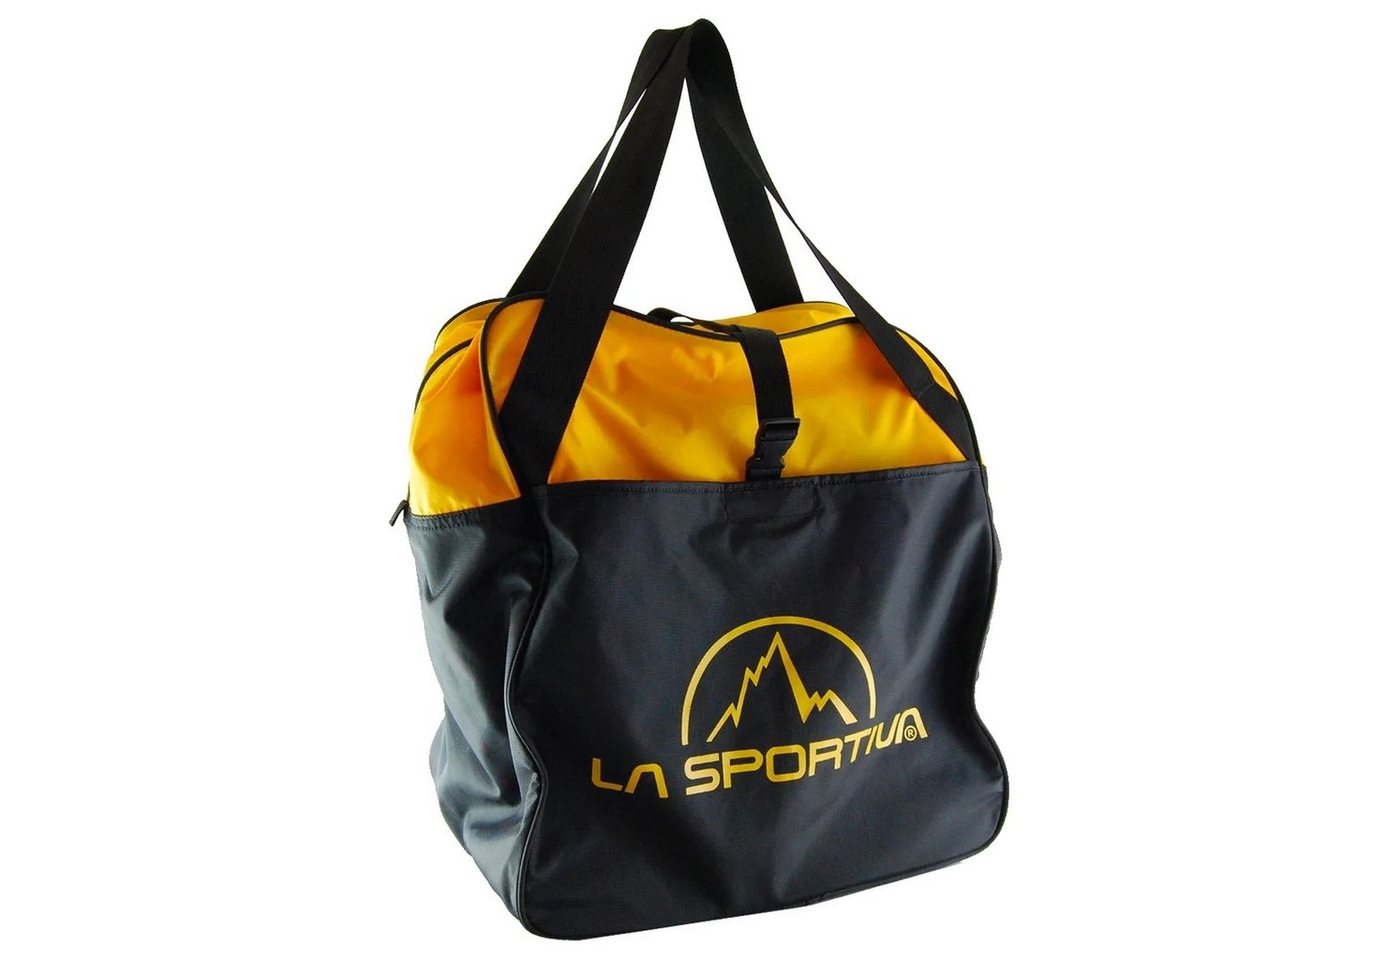 La Sportiva Sporttasche Skimo Bag - Tasche für Skischuhe von La Sportiva